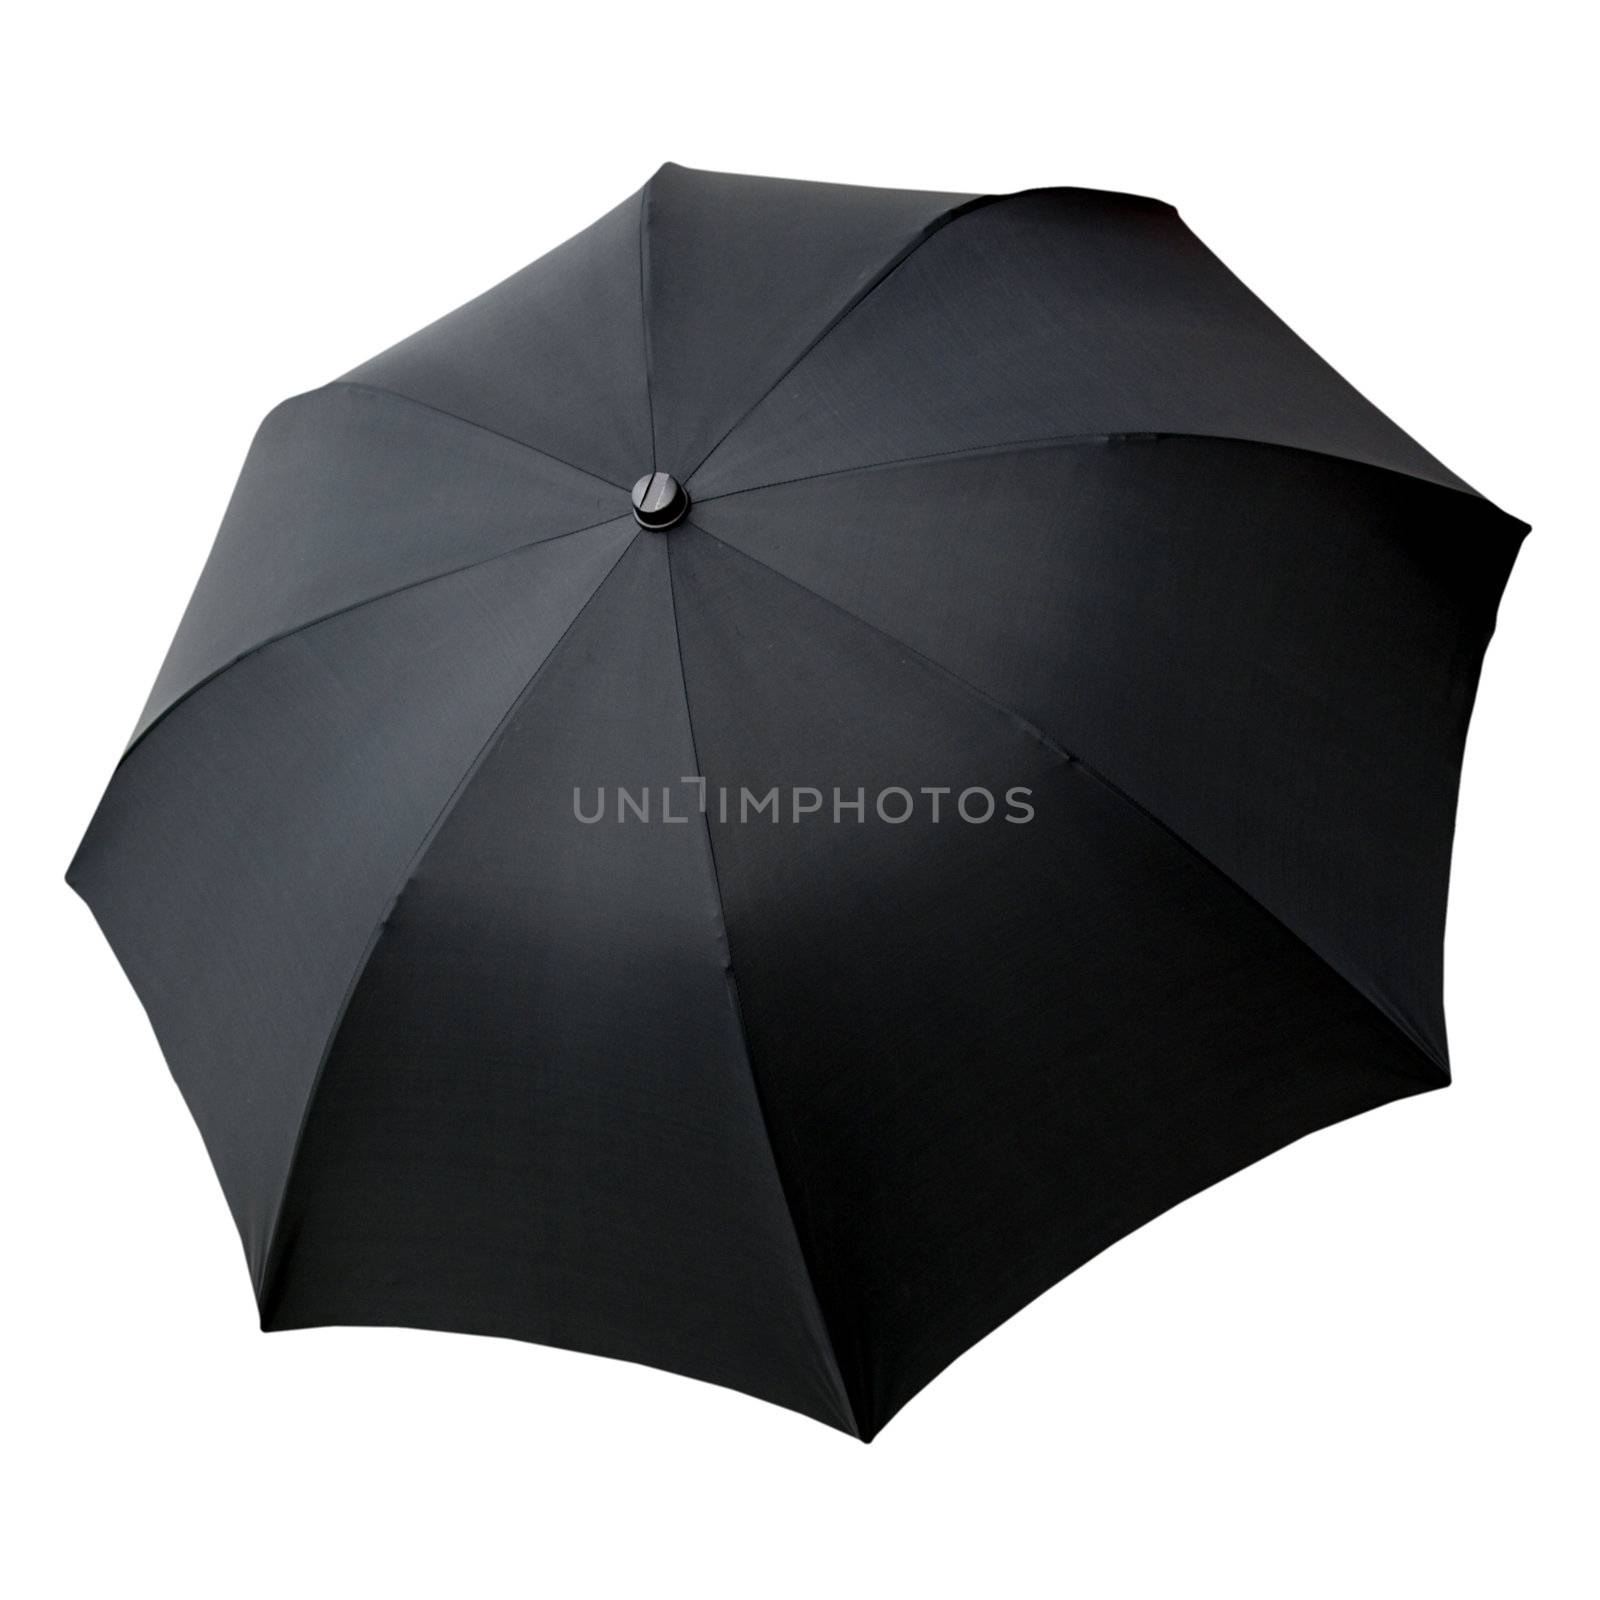 Umbrella by claudiodivizia